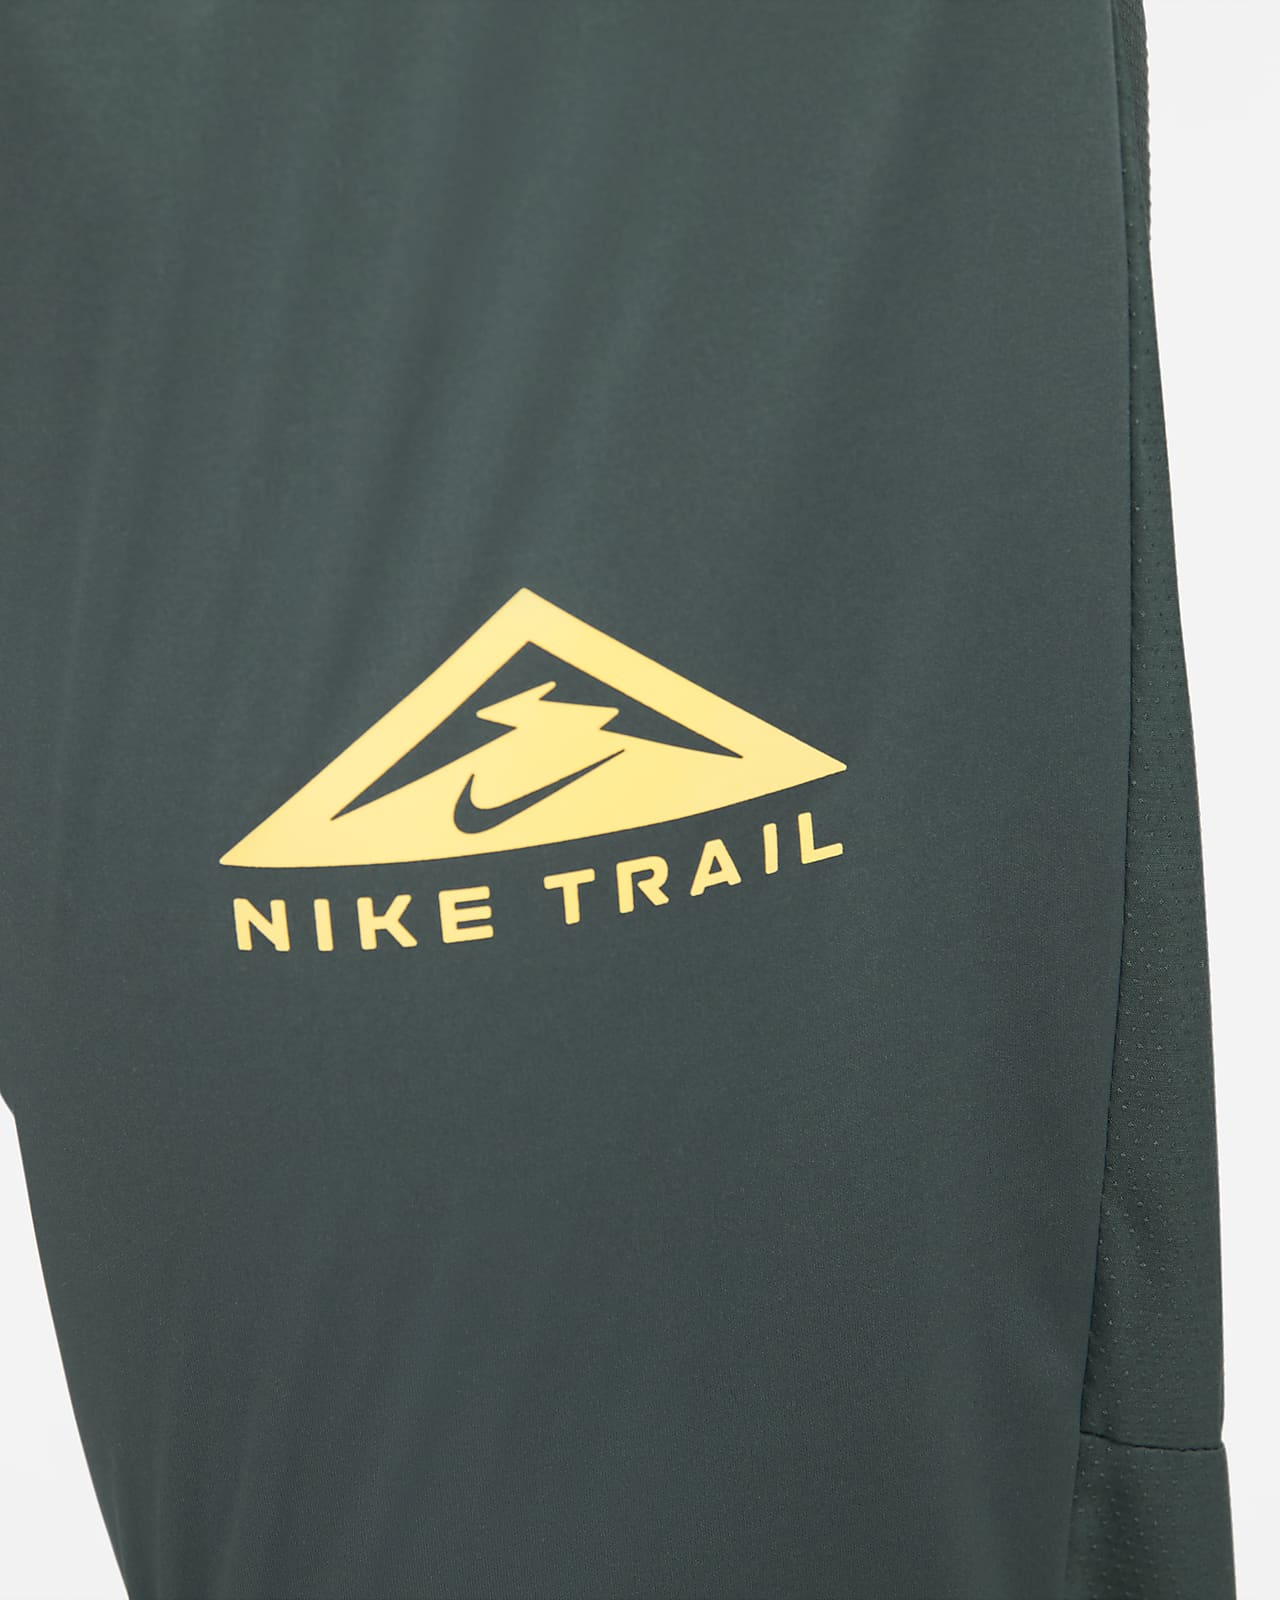 Nike Dri-FIT Phenom Elite Men's Knit Trail Running Trousers